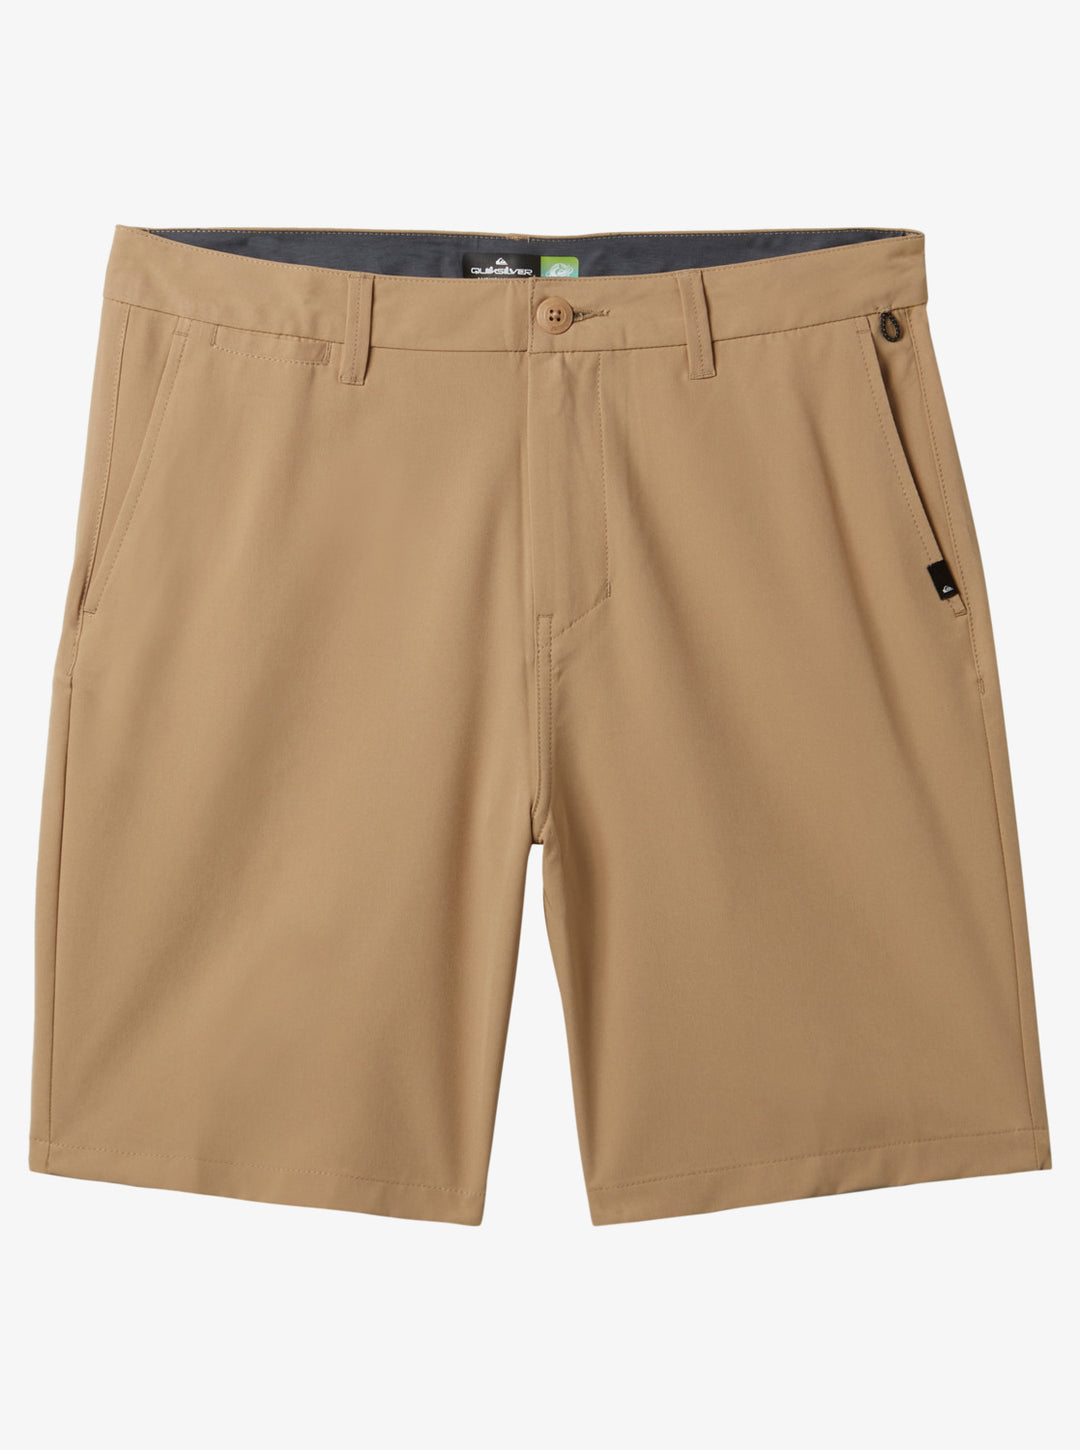 Quiksilver Ocean Union Amphibian 20" Hybrid Shorts - Plage - Sun Diego Boardshop